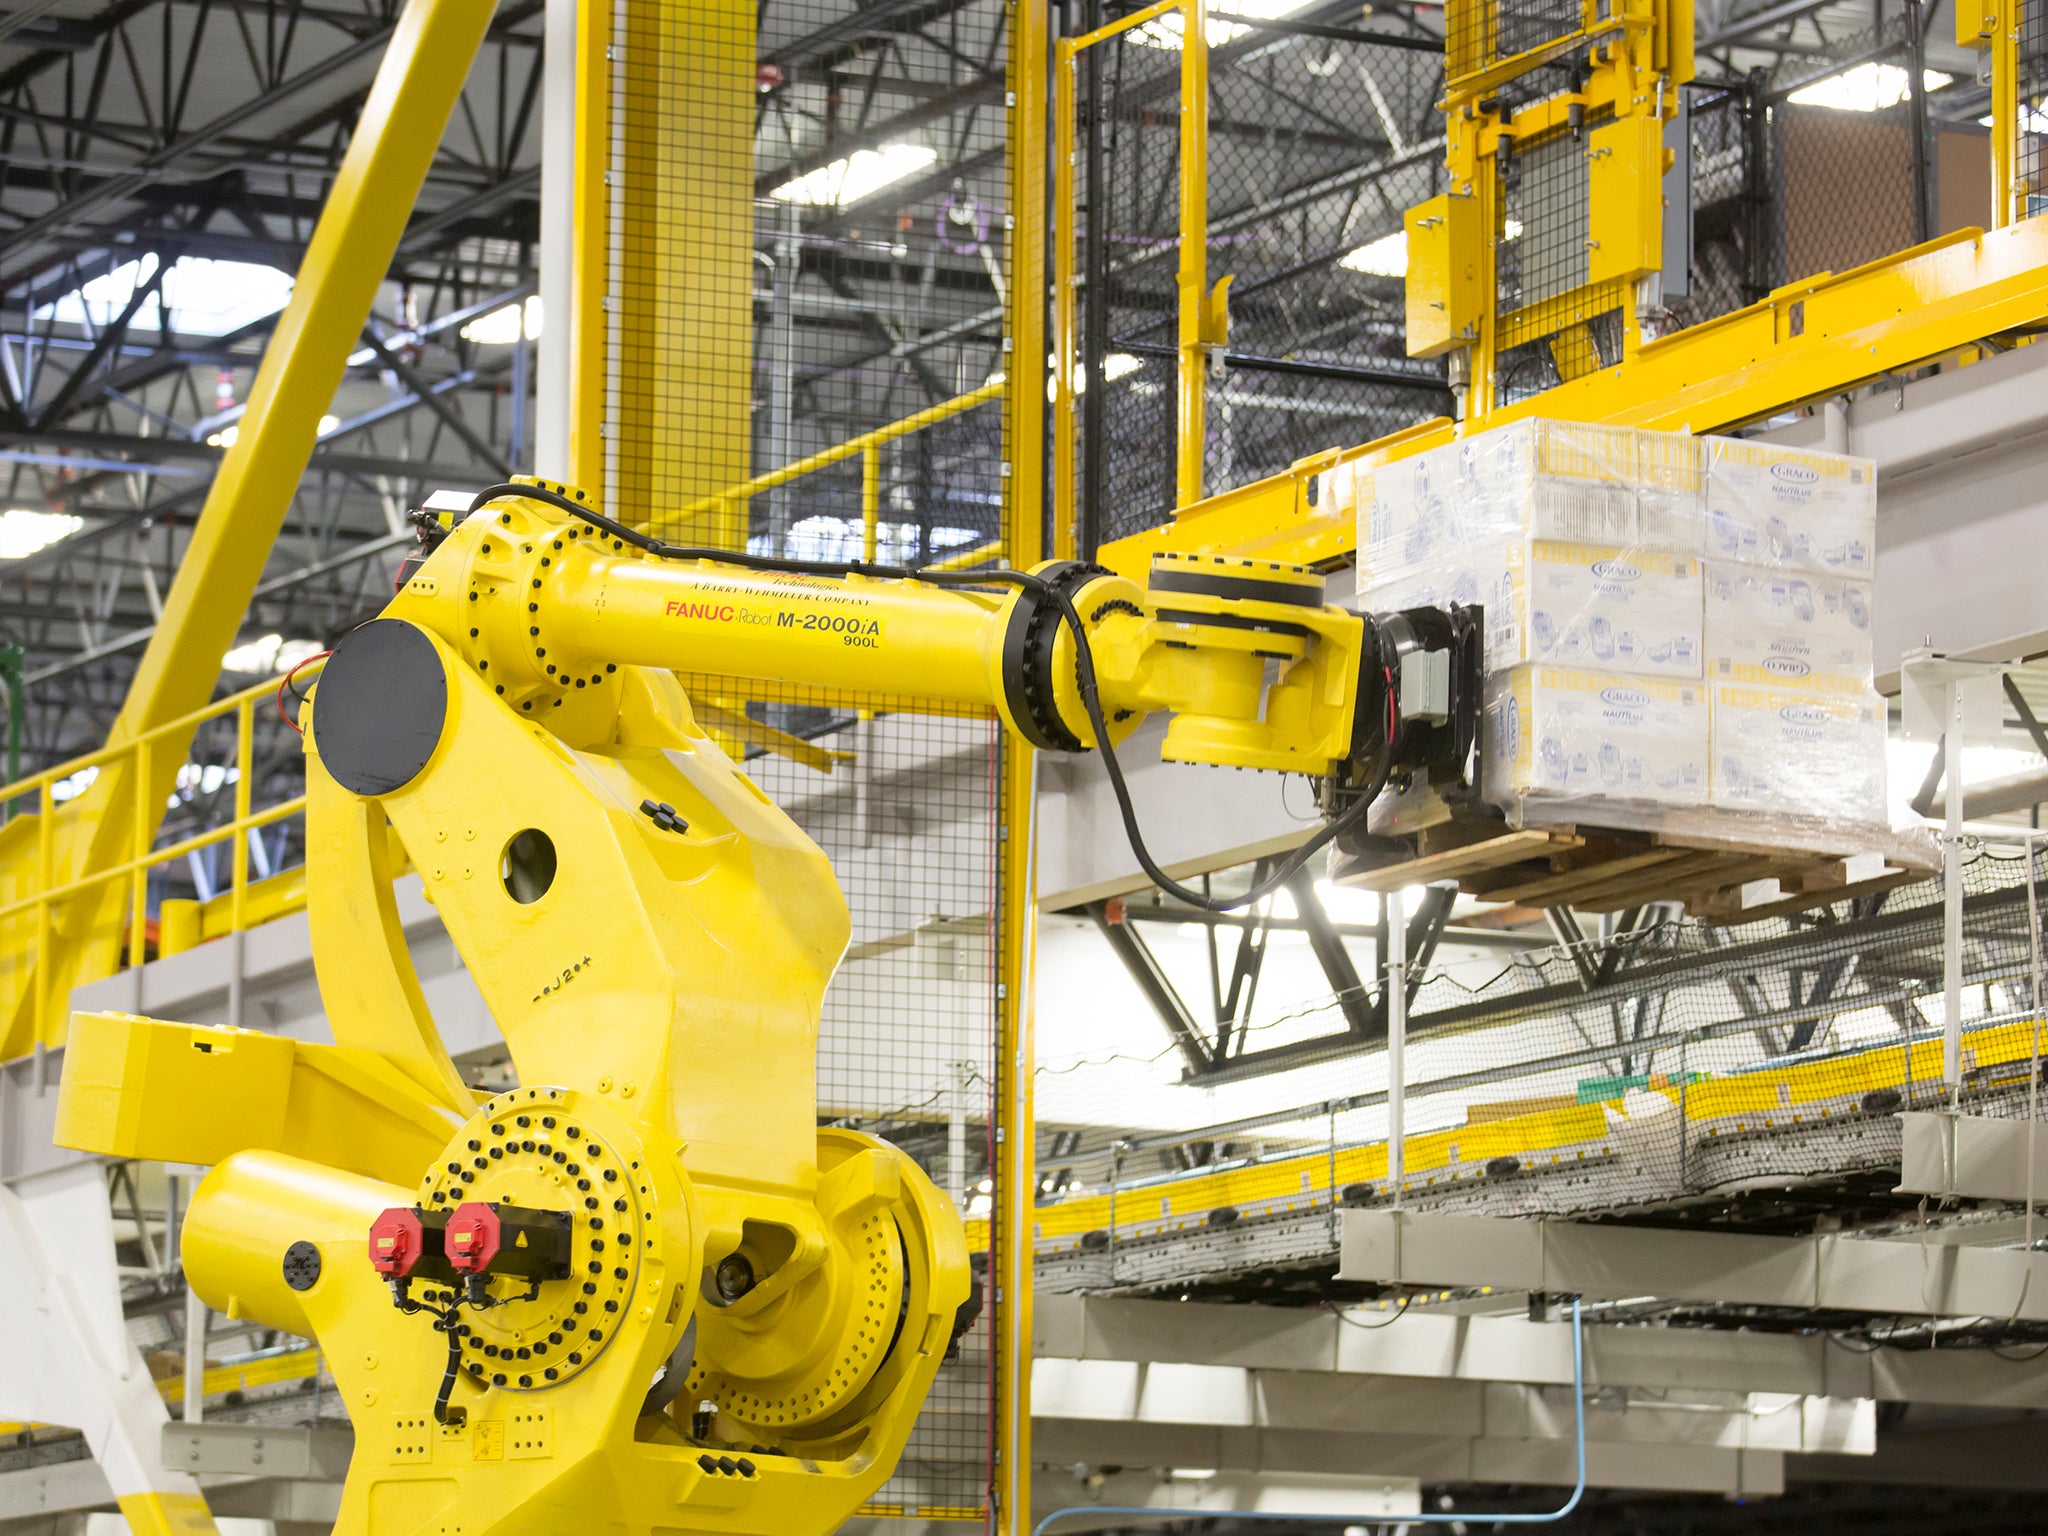 A robotic arm lifts a pallet of merchandise inside an Amazon Fulfillment Center